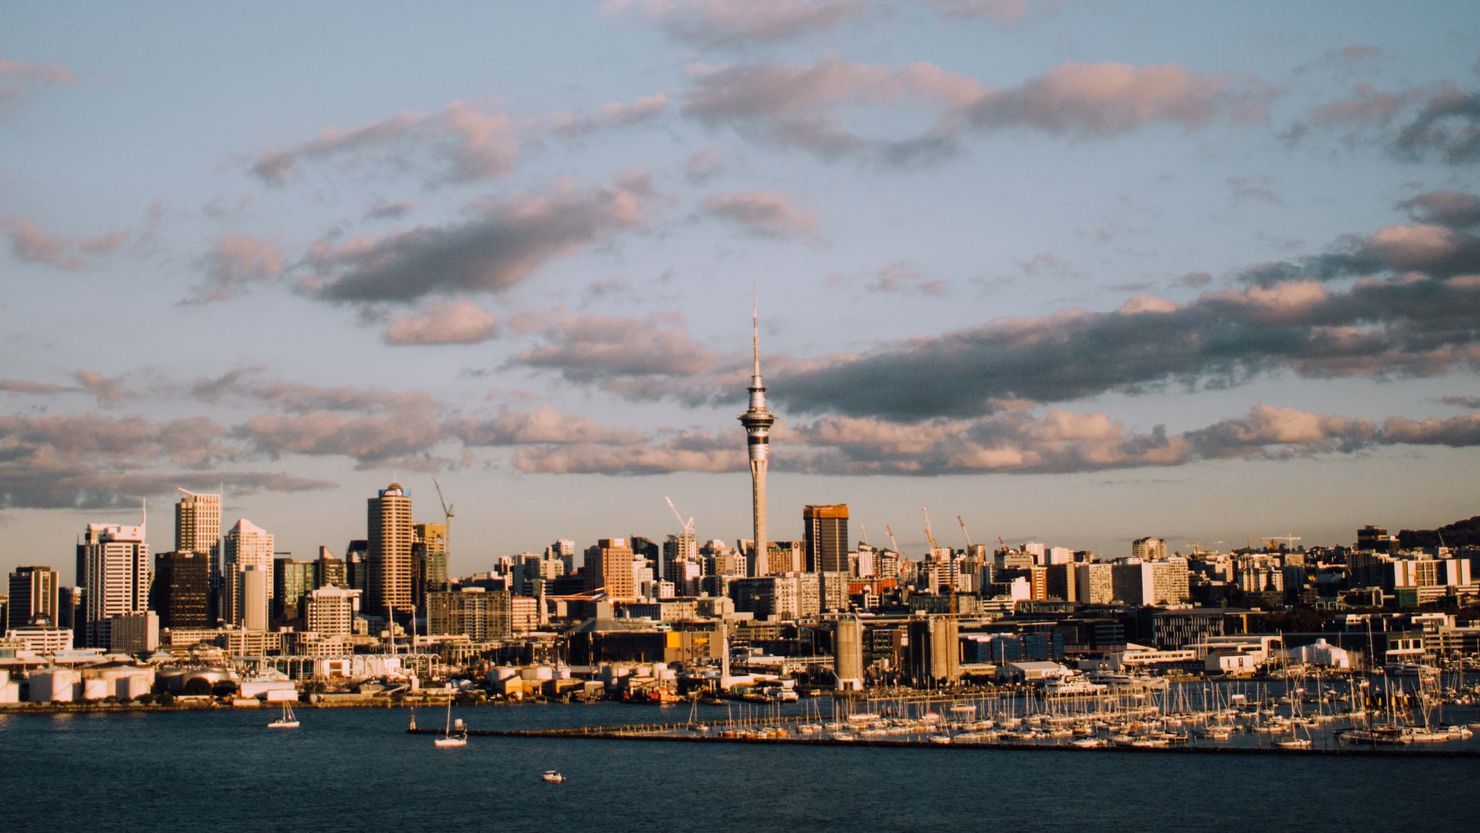 Photo of Auckland City - By Tim Marshall on Unsplash